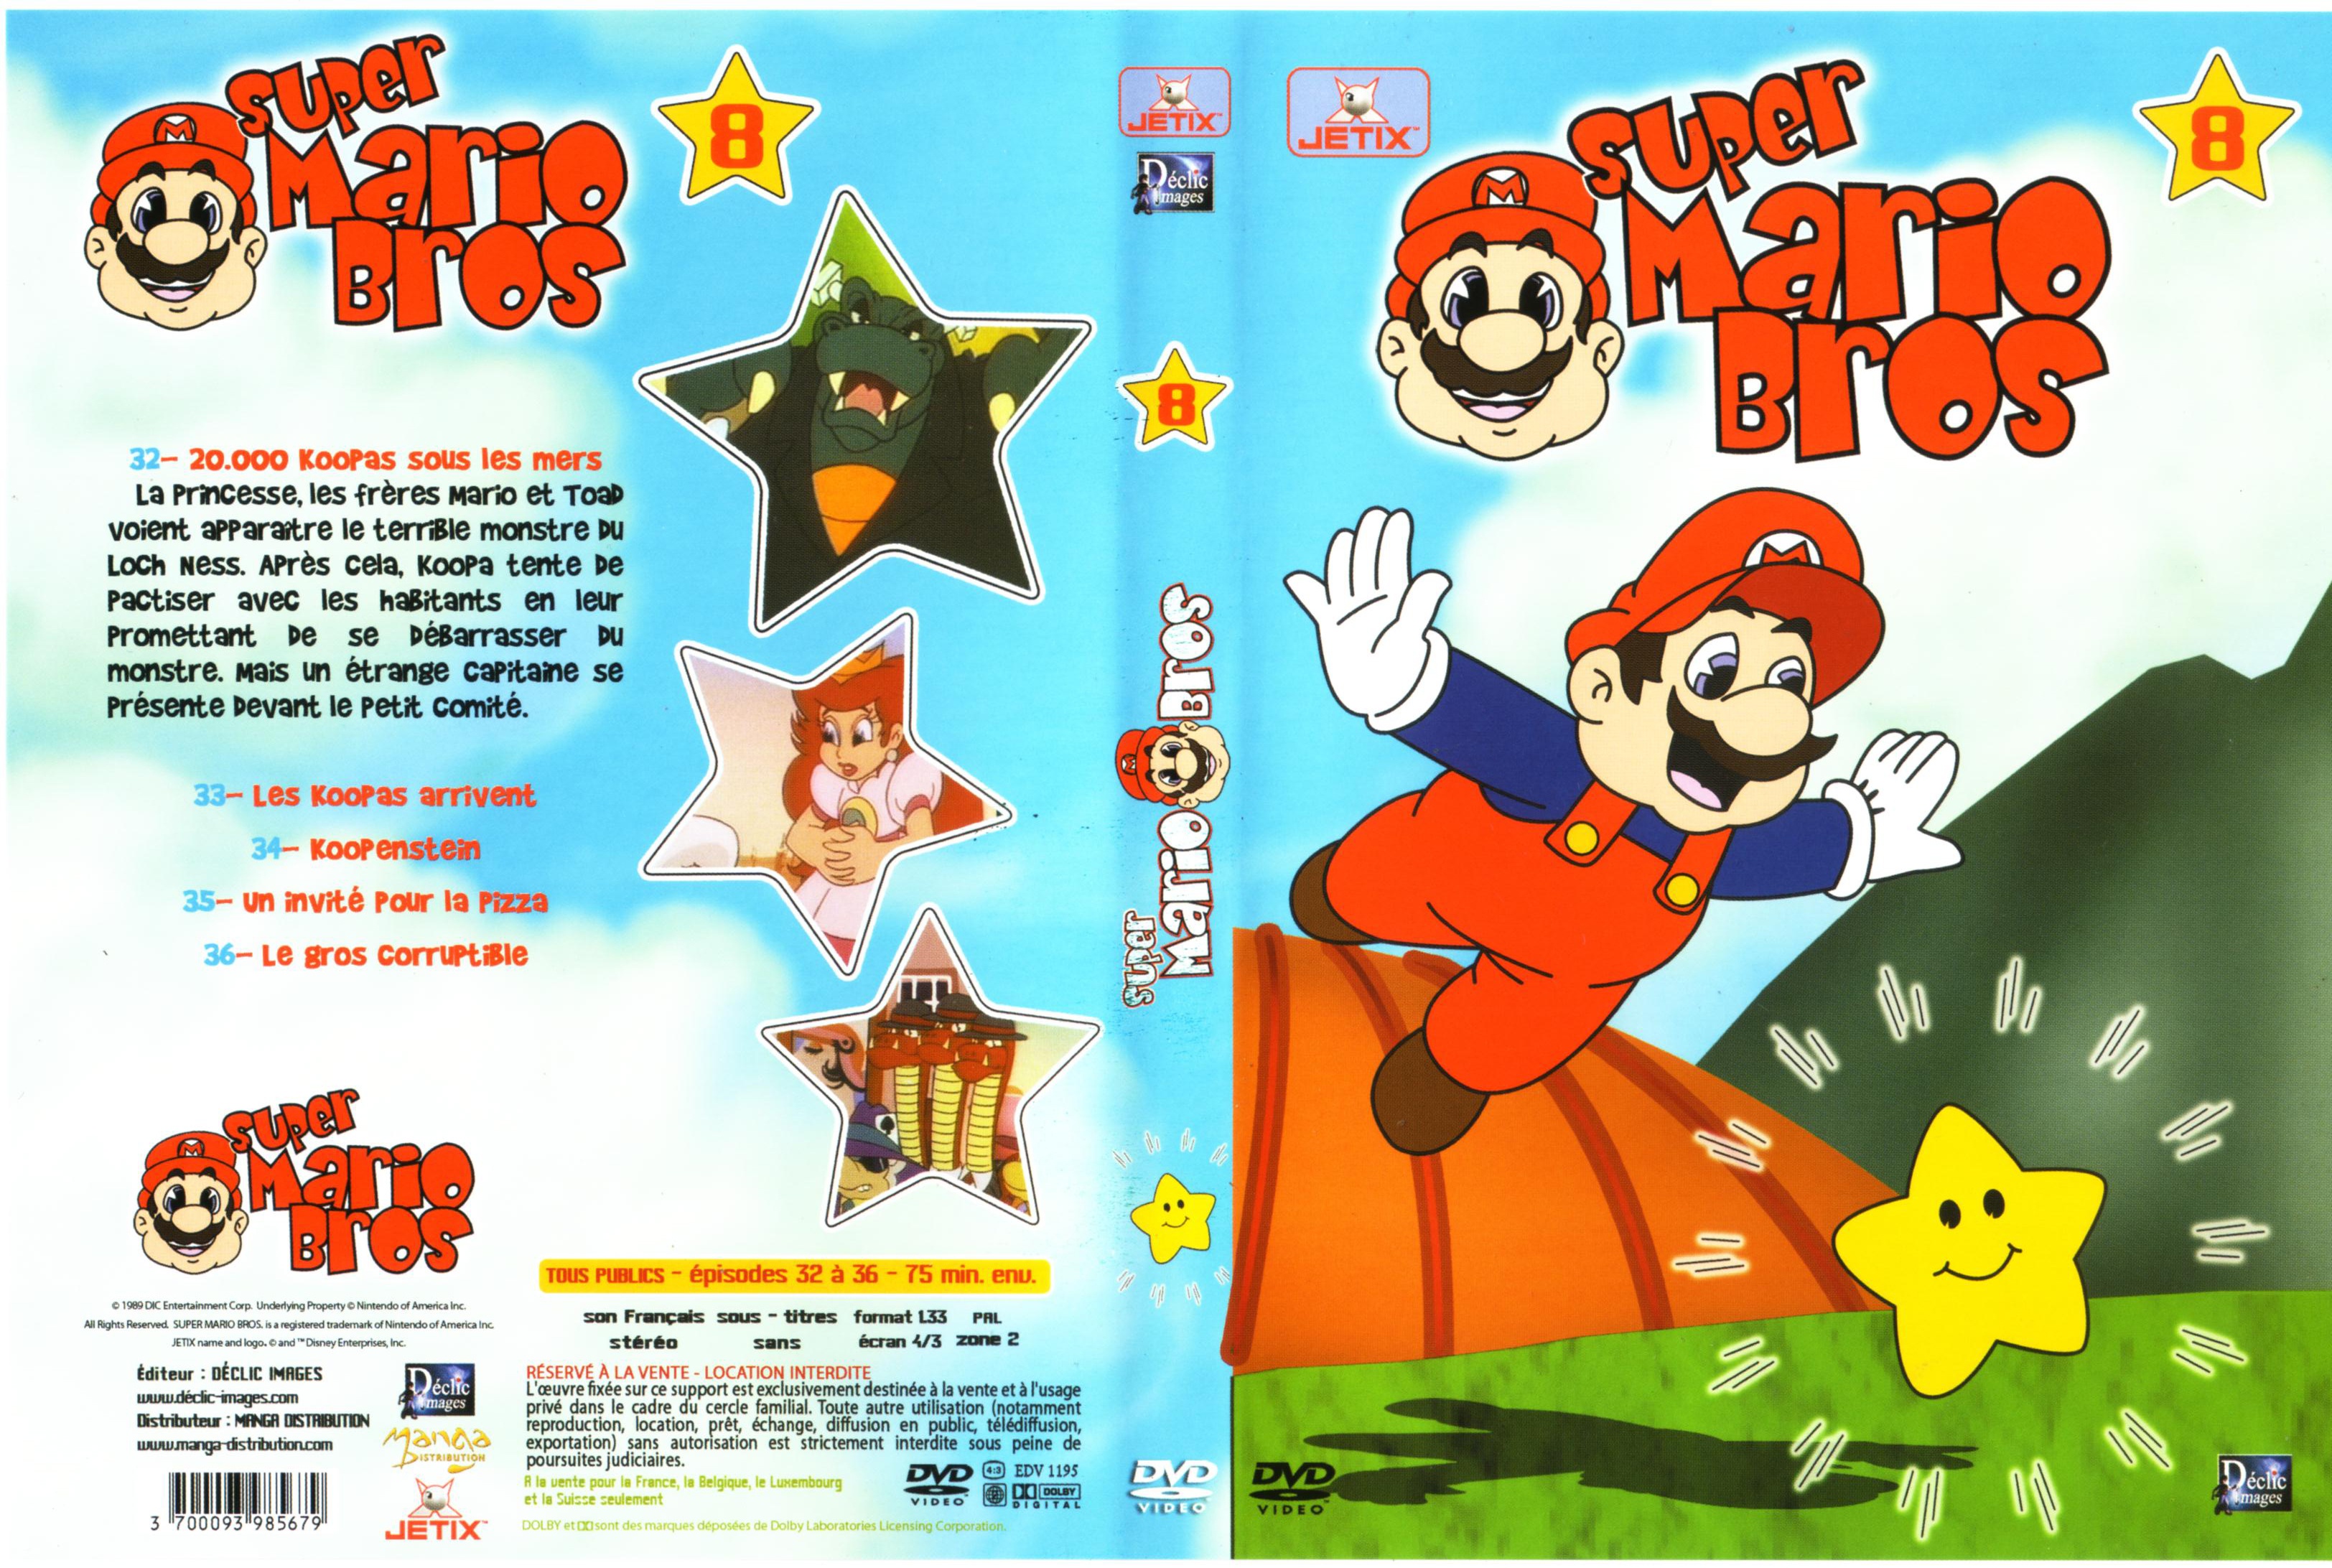 Jaquette DVD Super Mario Bros vol 8